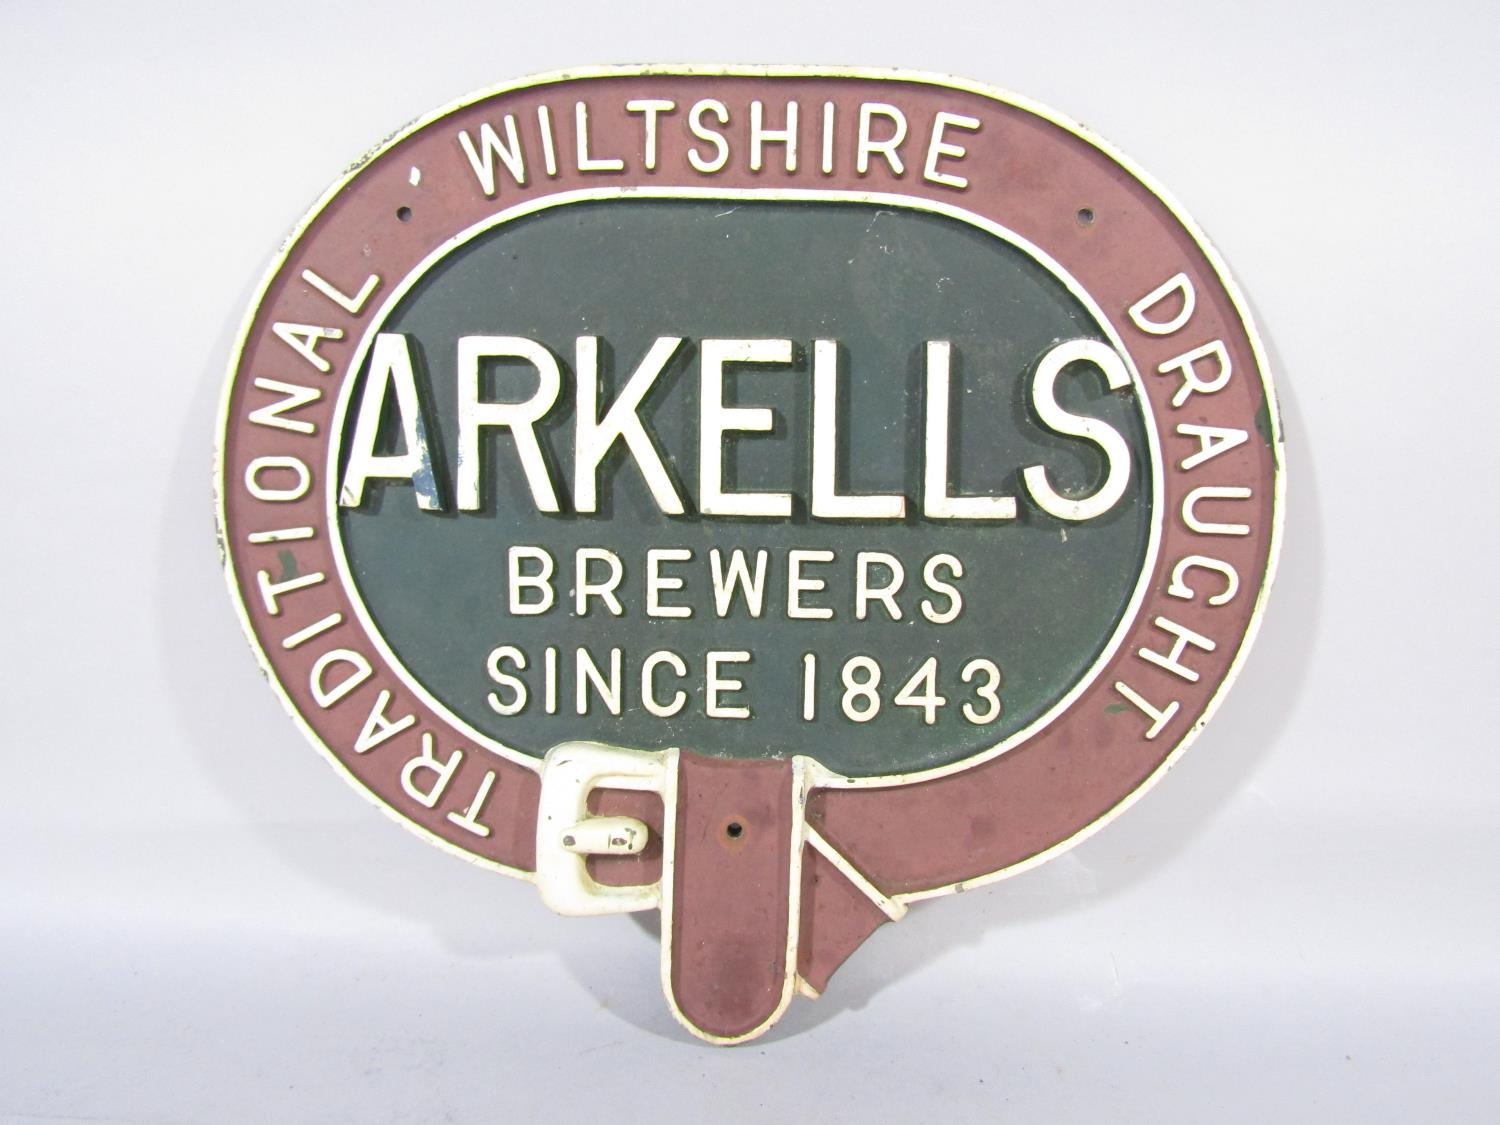 An Arkells Brewers cast alloy advertisement sign, 45cm x 41cm.